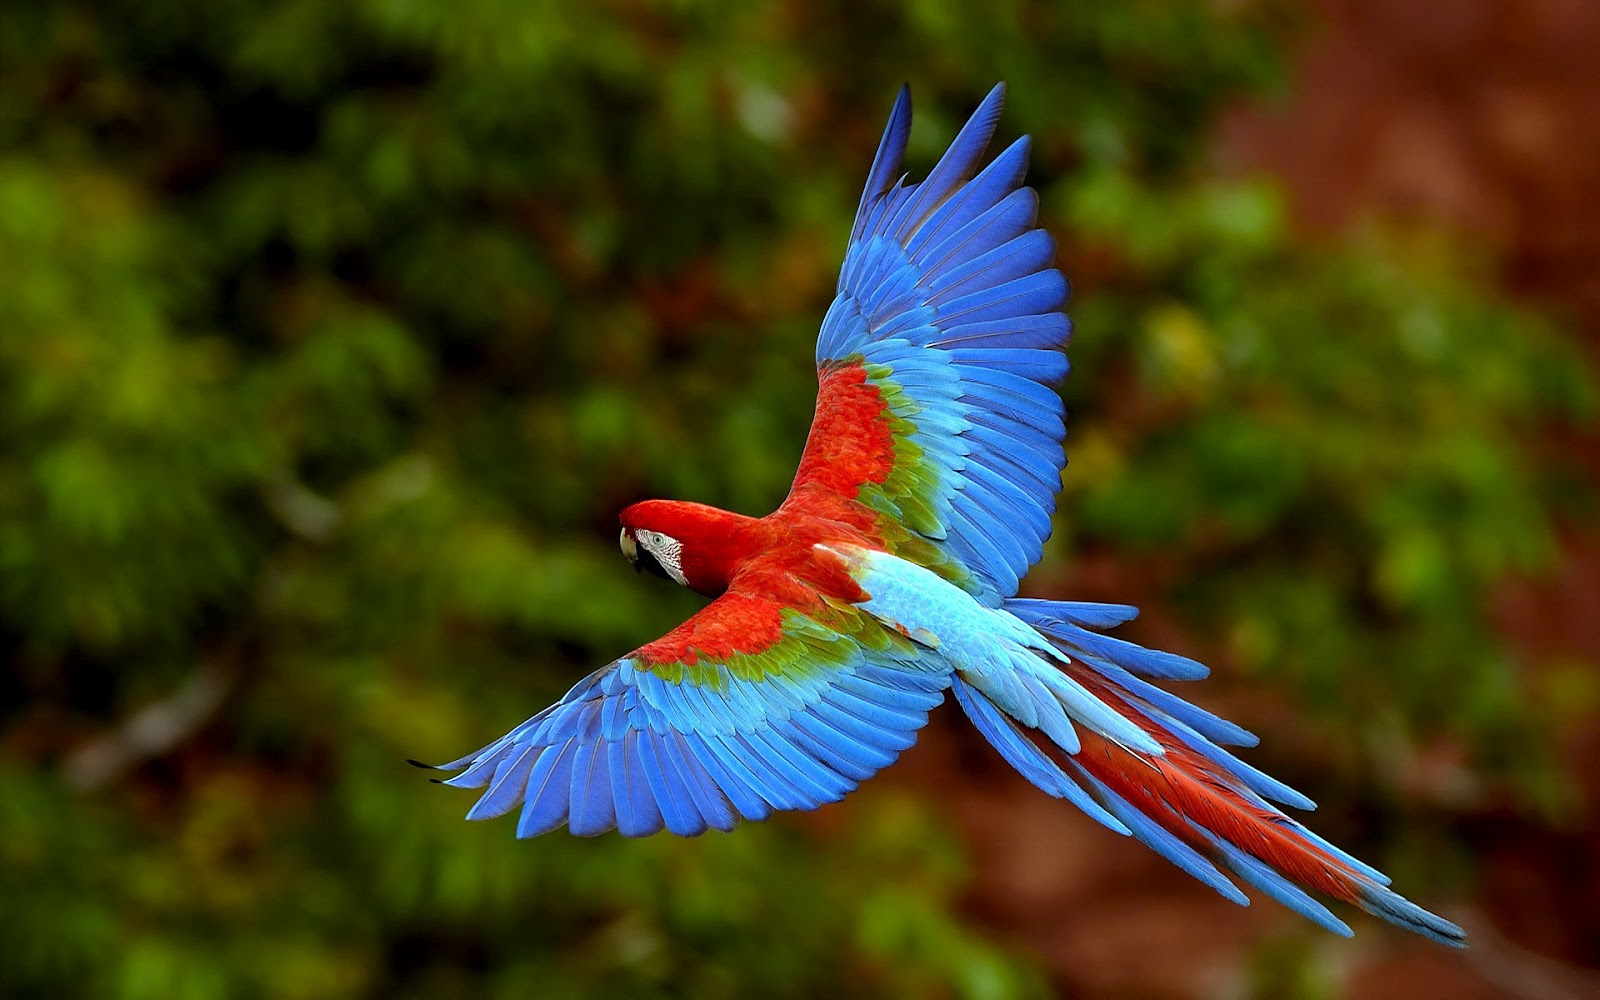 desktop images of parrots of the world